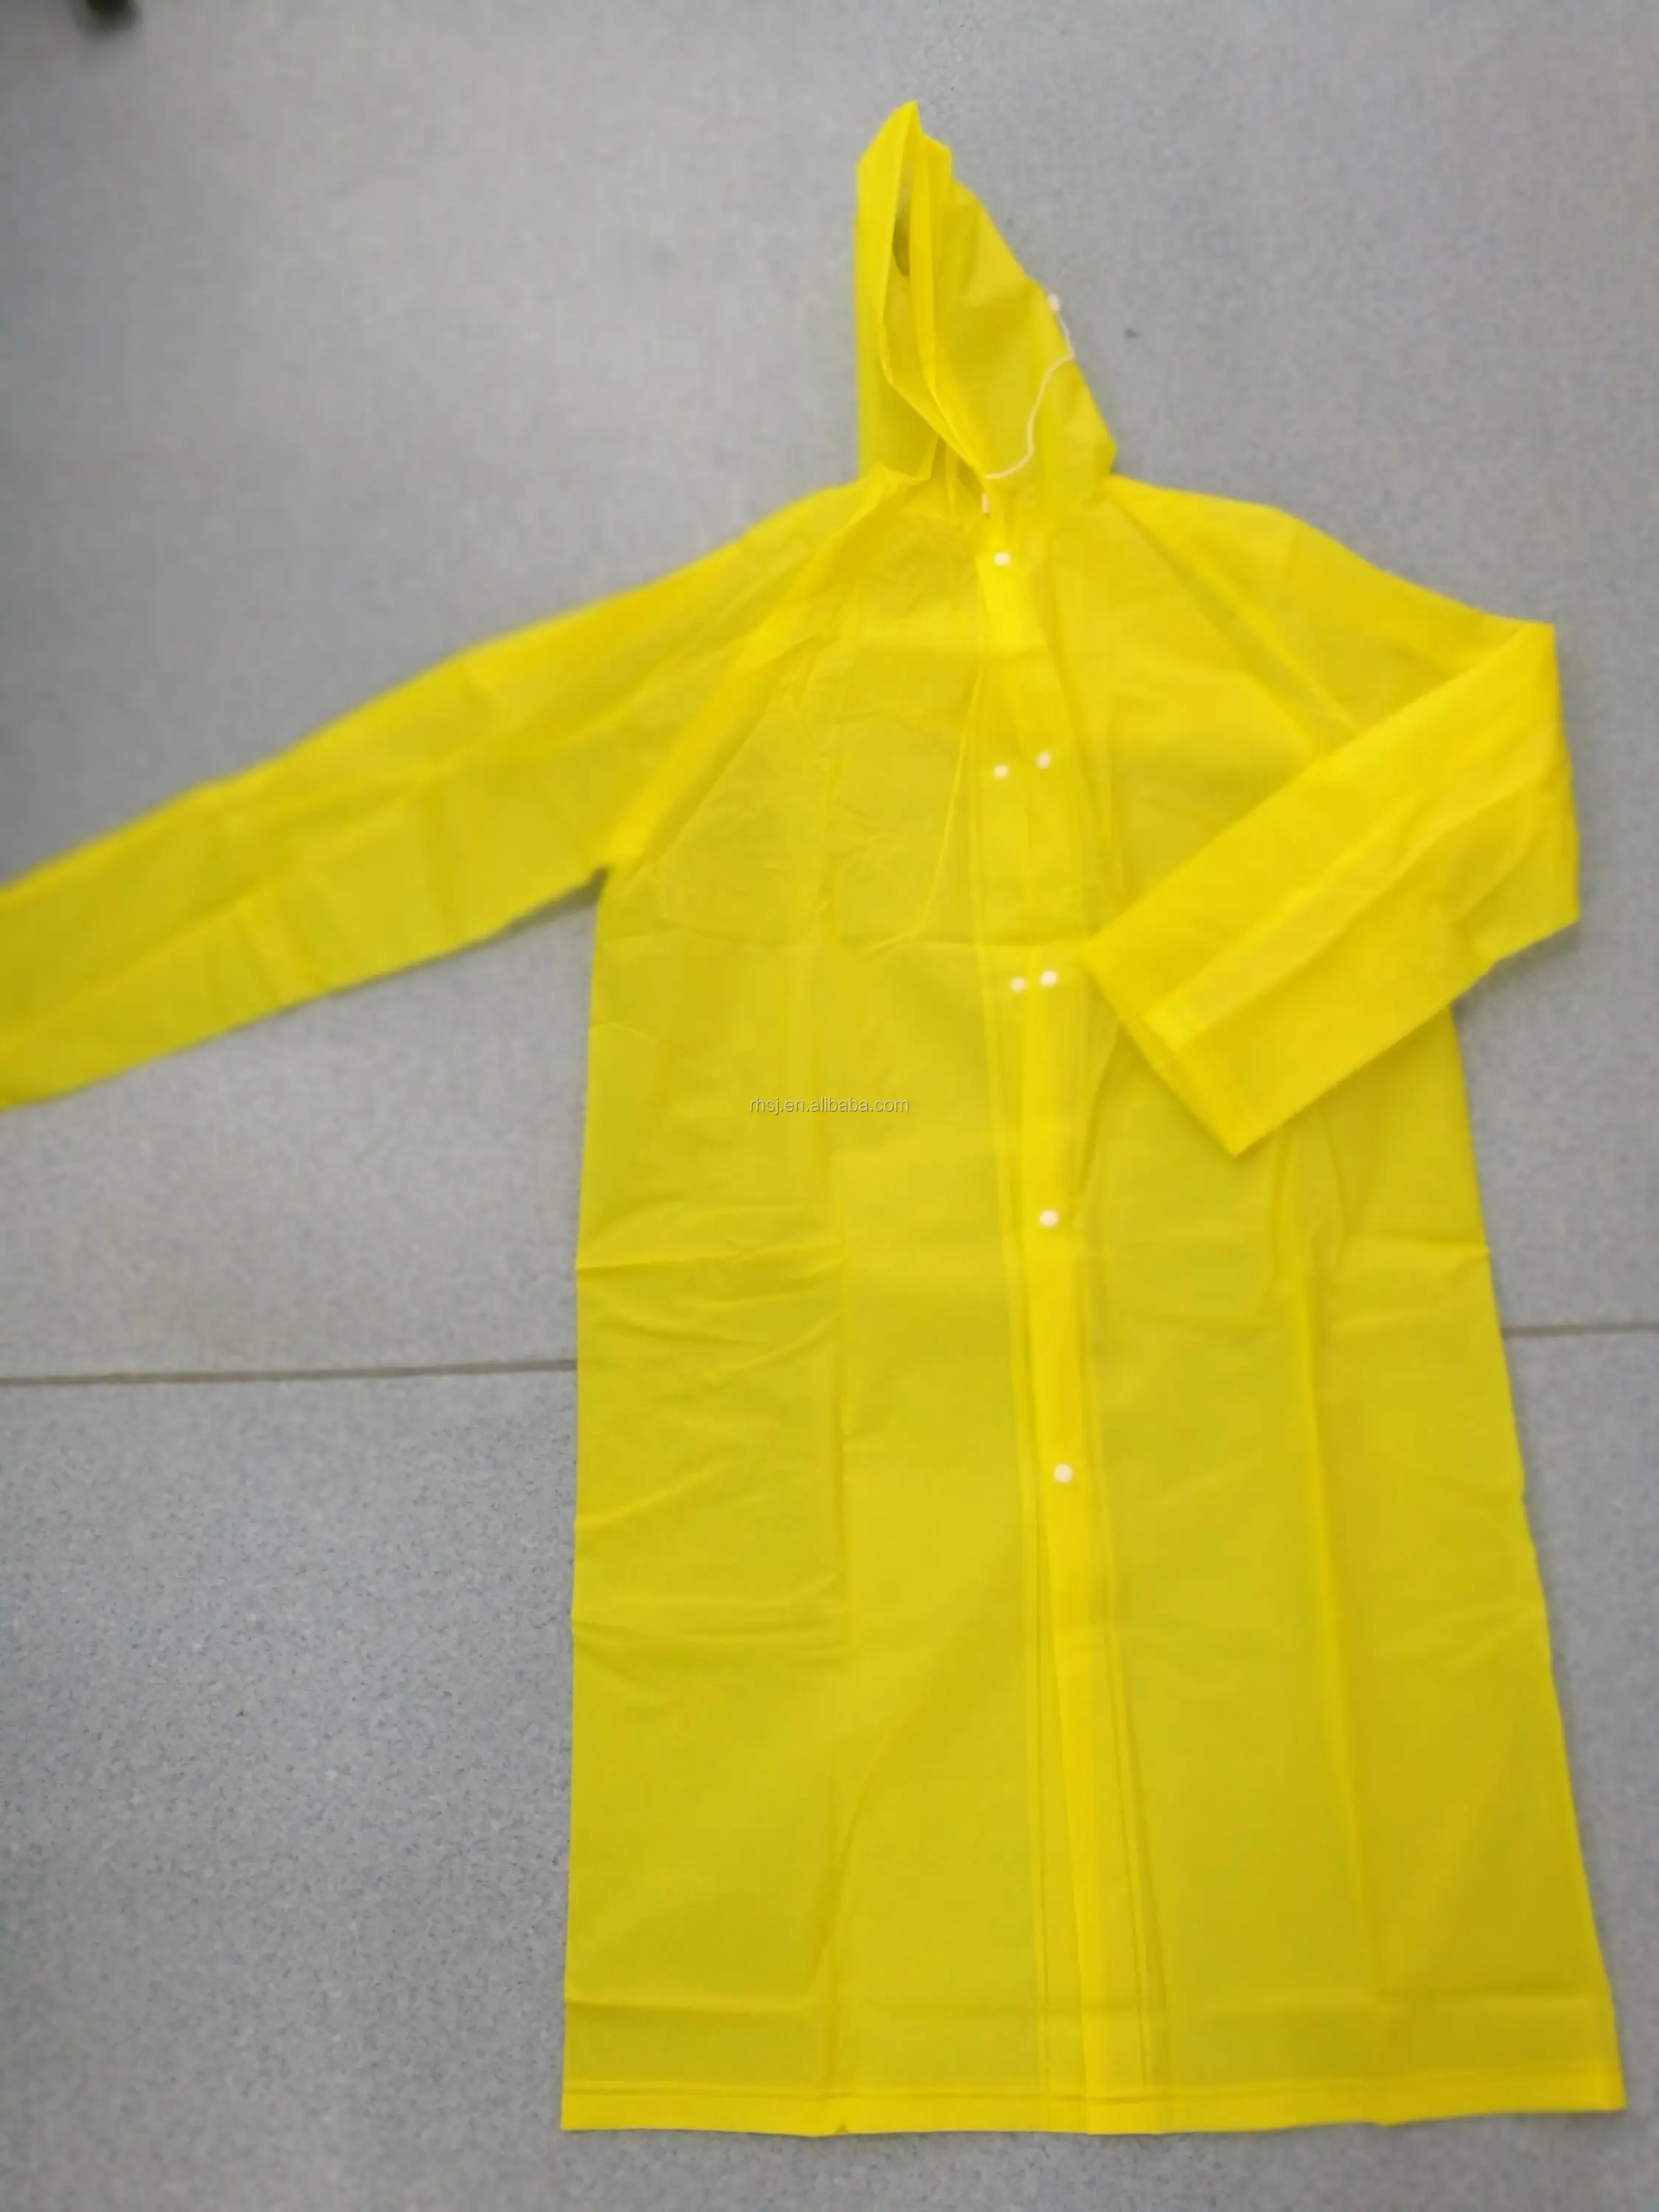 Eva Raincoat For Student Can Put Bag - Buy Raincoat,Economic With Bag ...